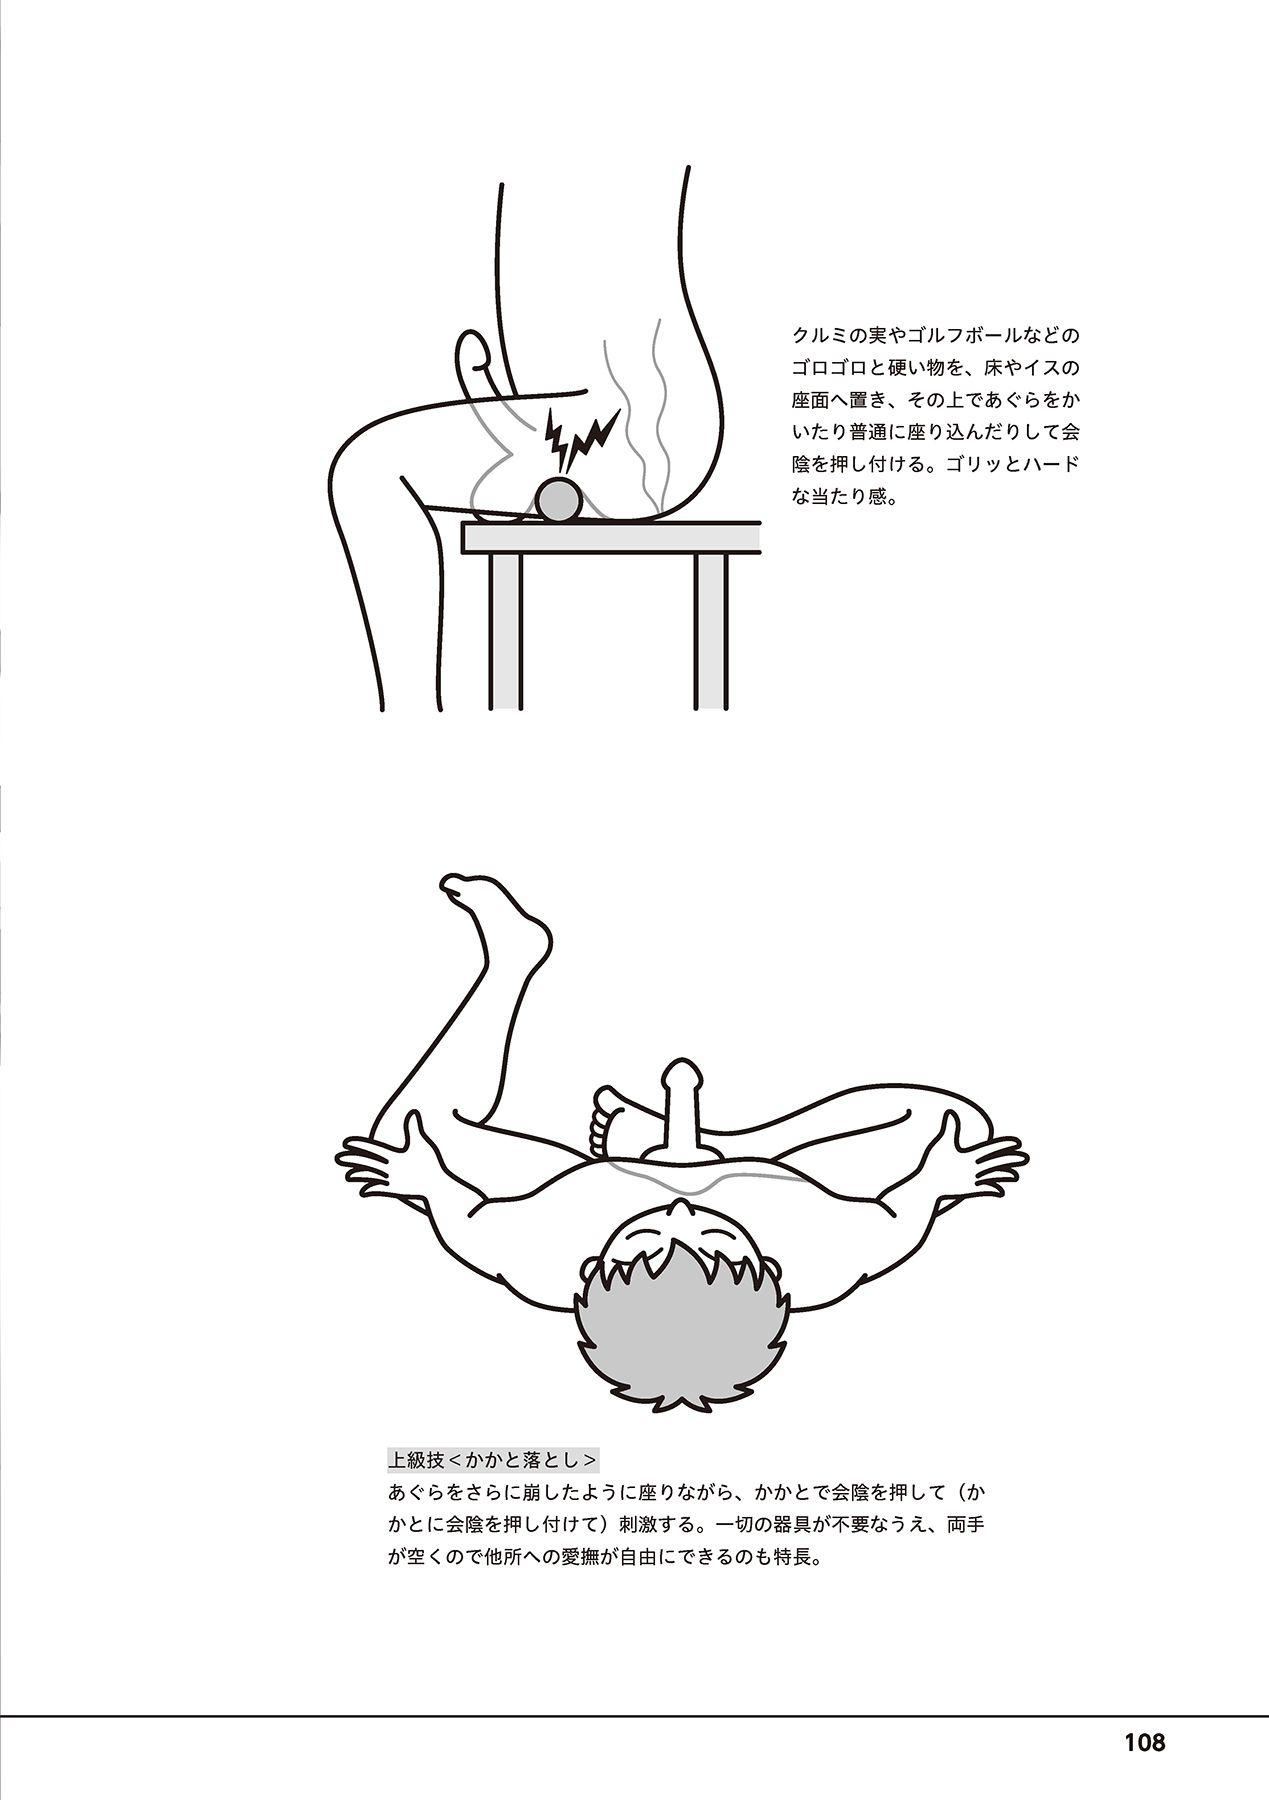 Otoko no Jii Onanie Kanzen Manual Illustration Han...... Onanie Play 109